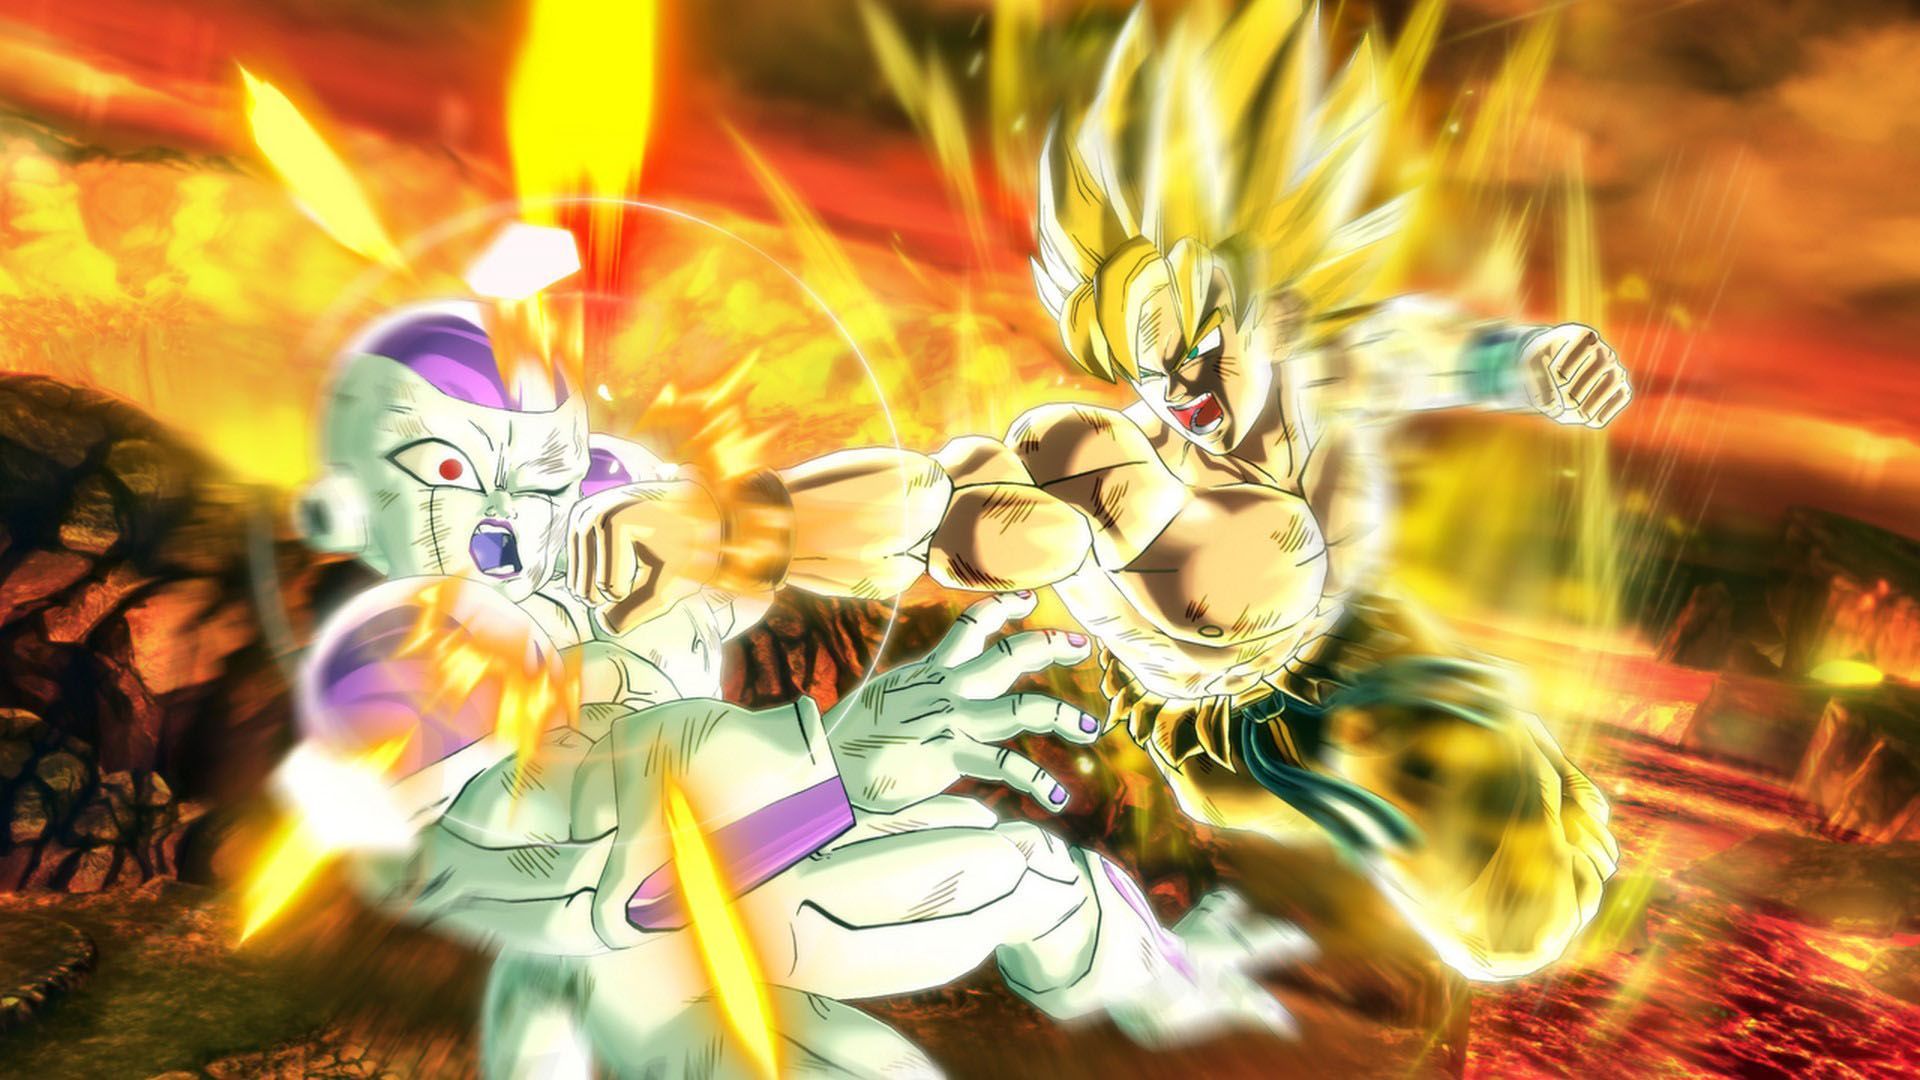 Goku vs Frieza Wallpaper Free Goku vs Frieza Background